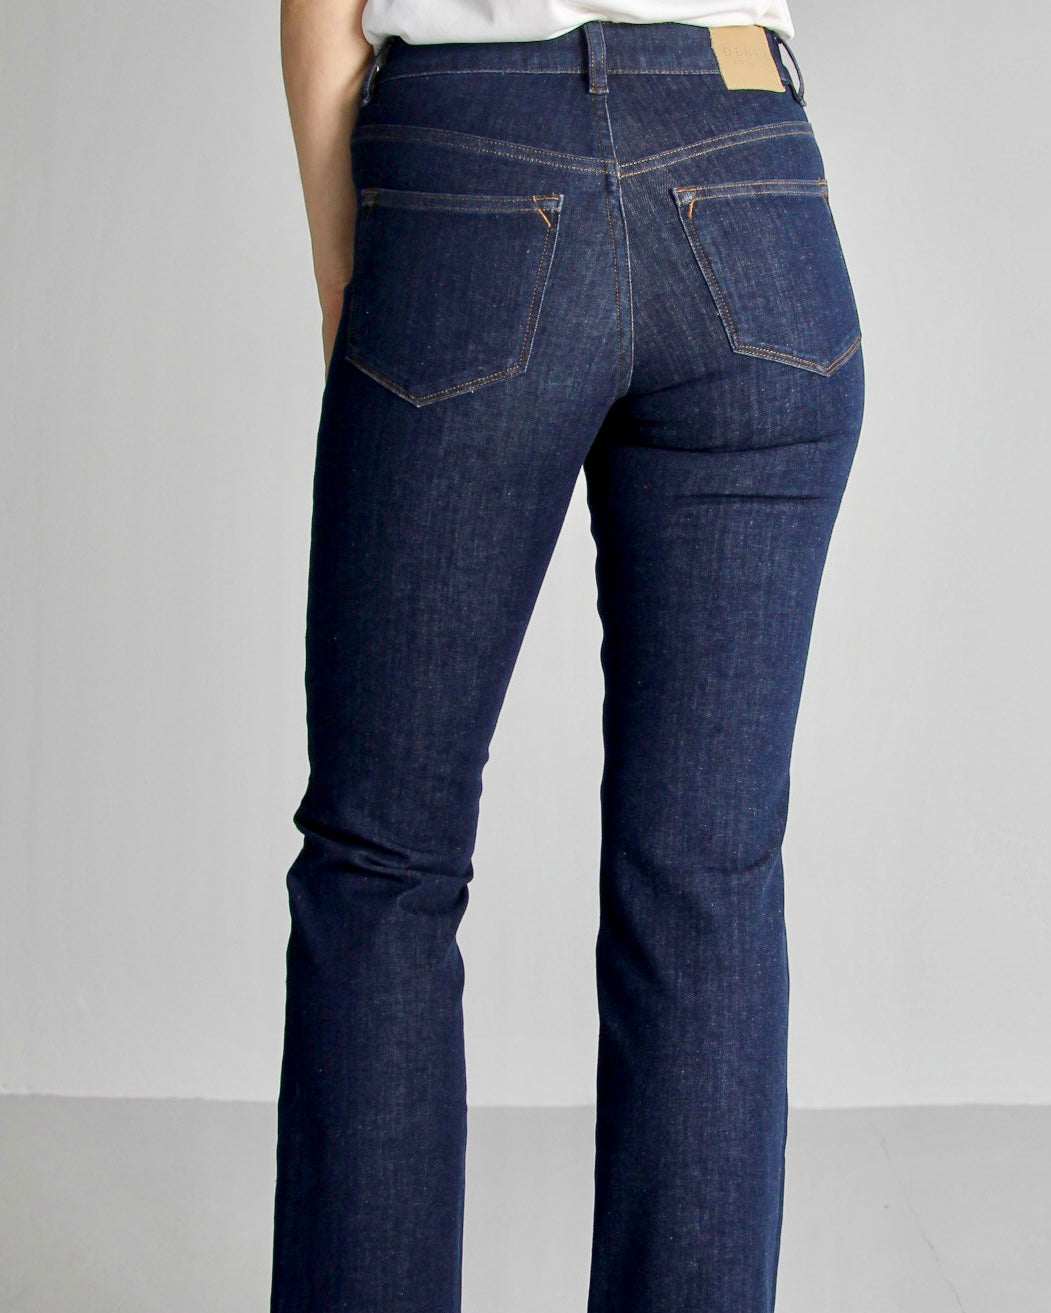 Violet Evening blue Jeans - Dame - Straight leg - High waist - Stretchy